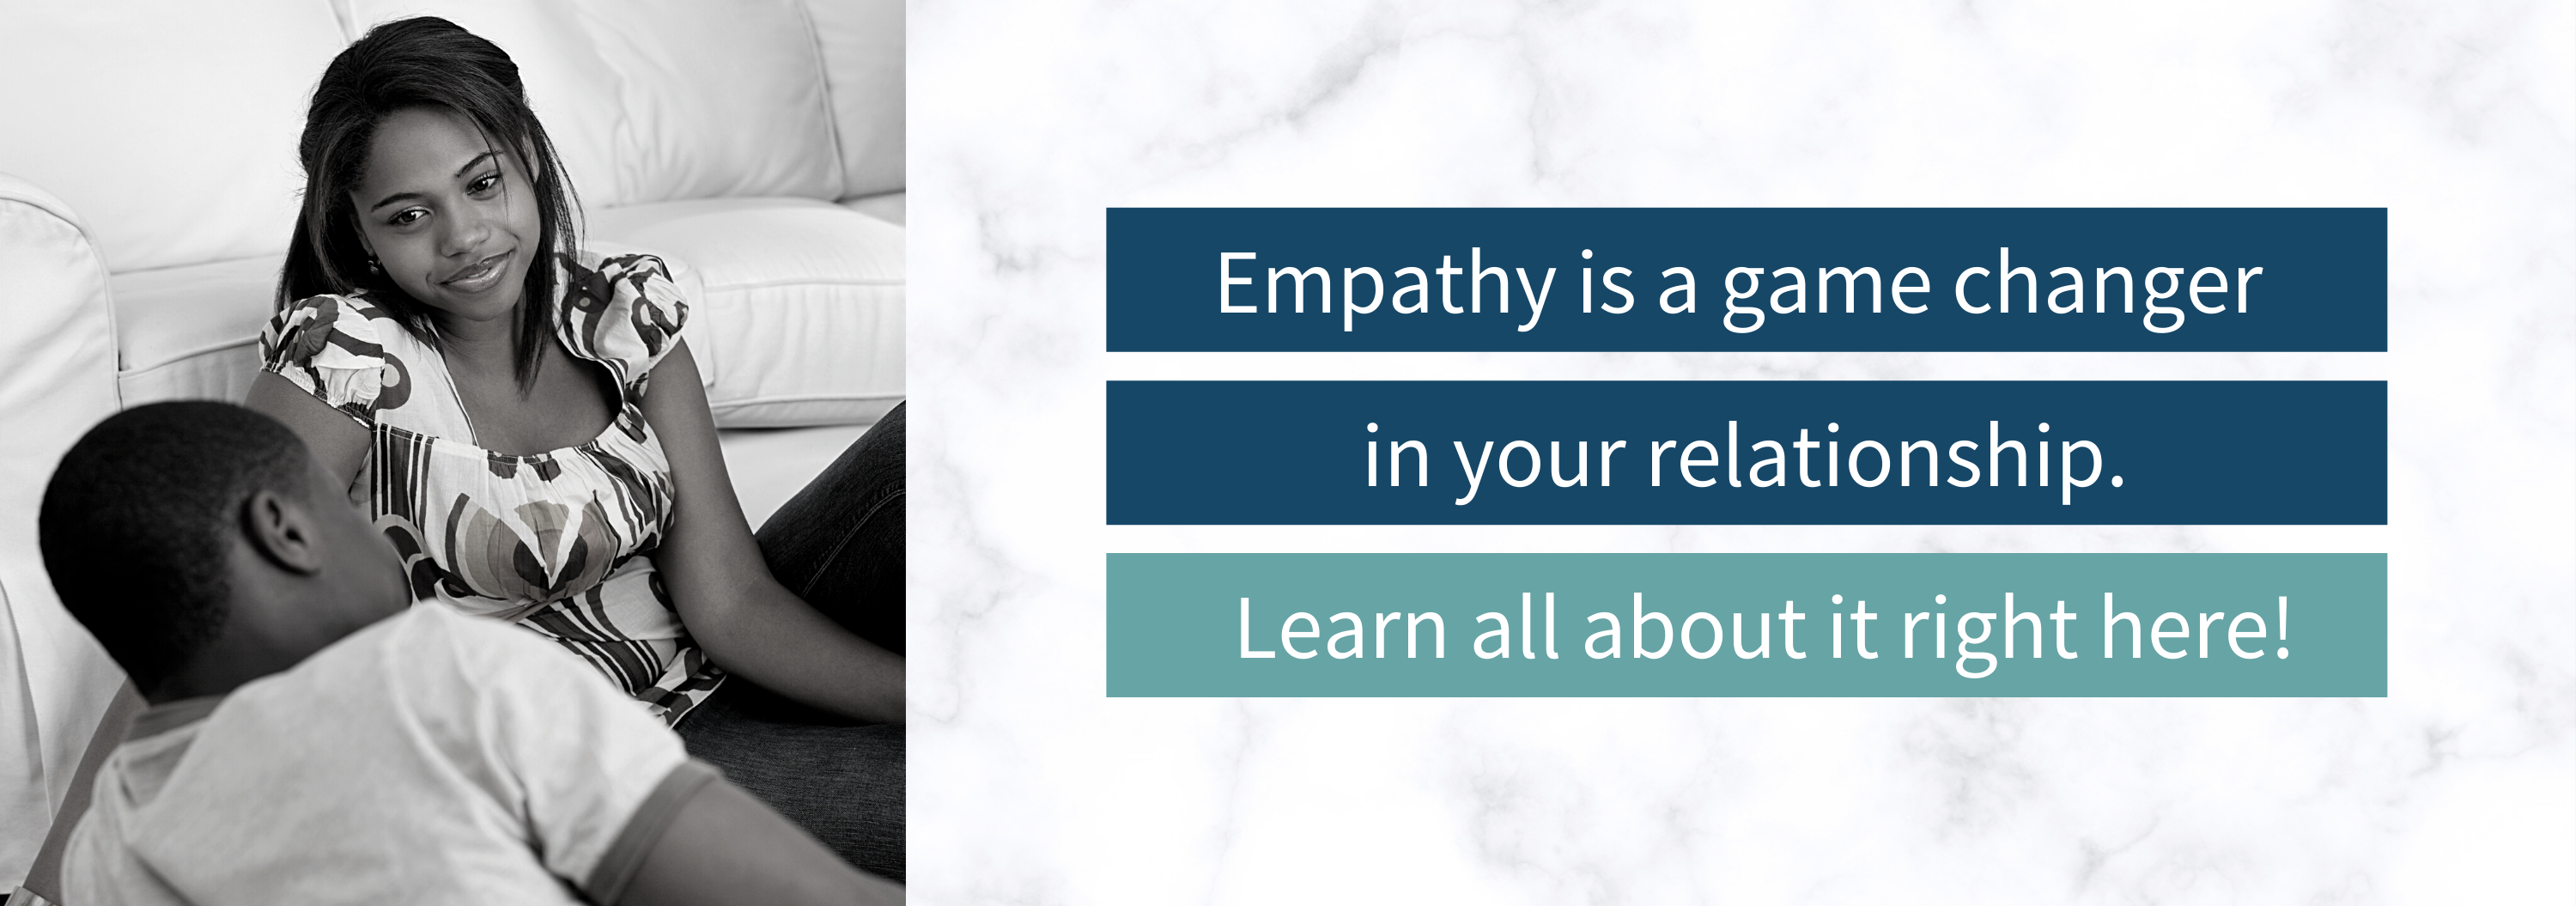 empathy in relationships